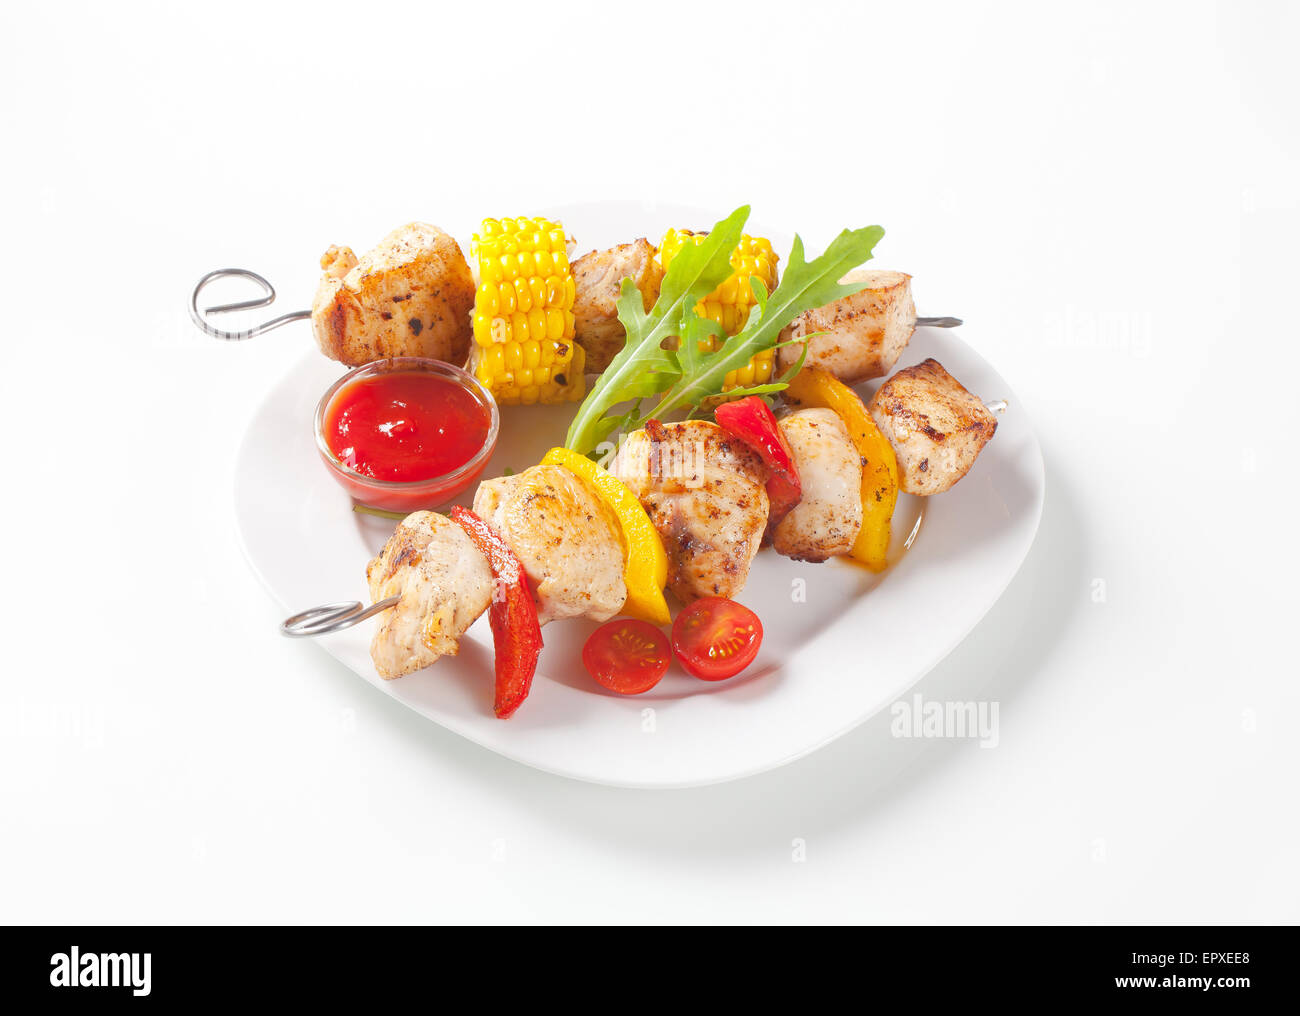 Grigliate di carne e verdura su spiedini e ketchup Foto Stock